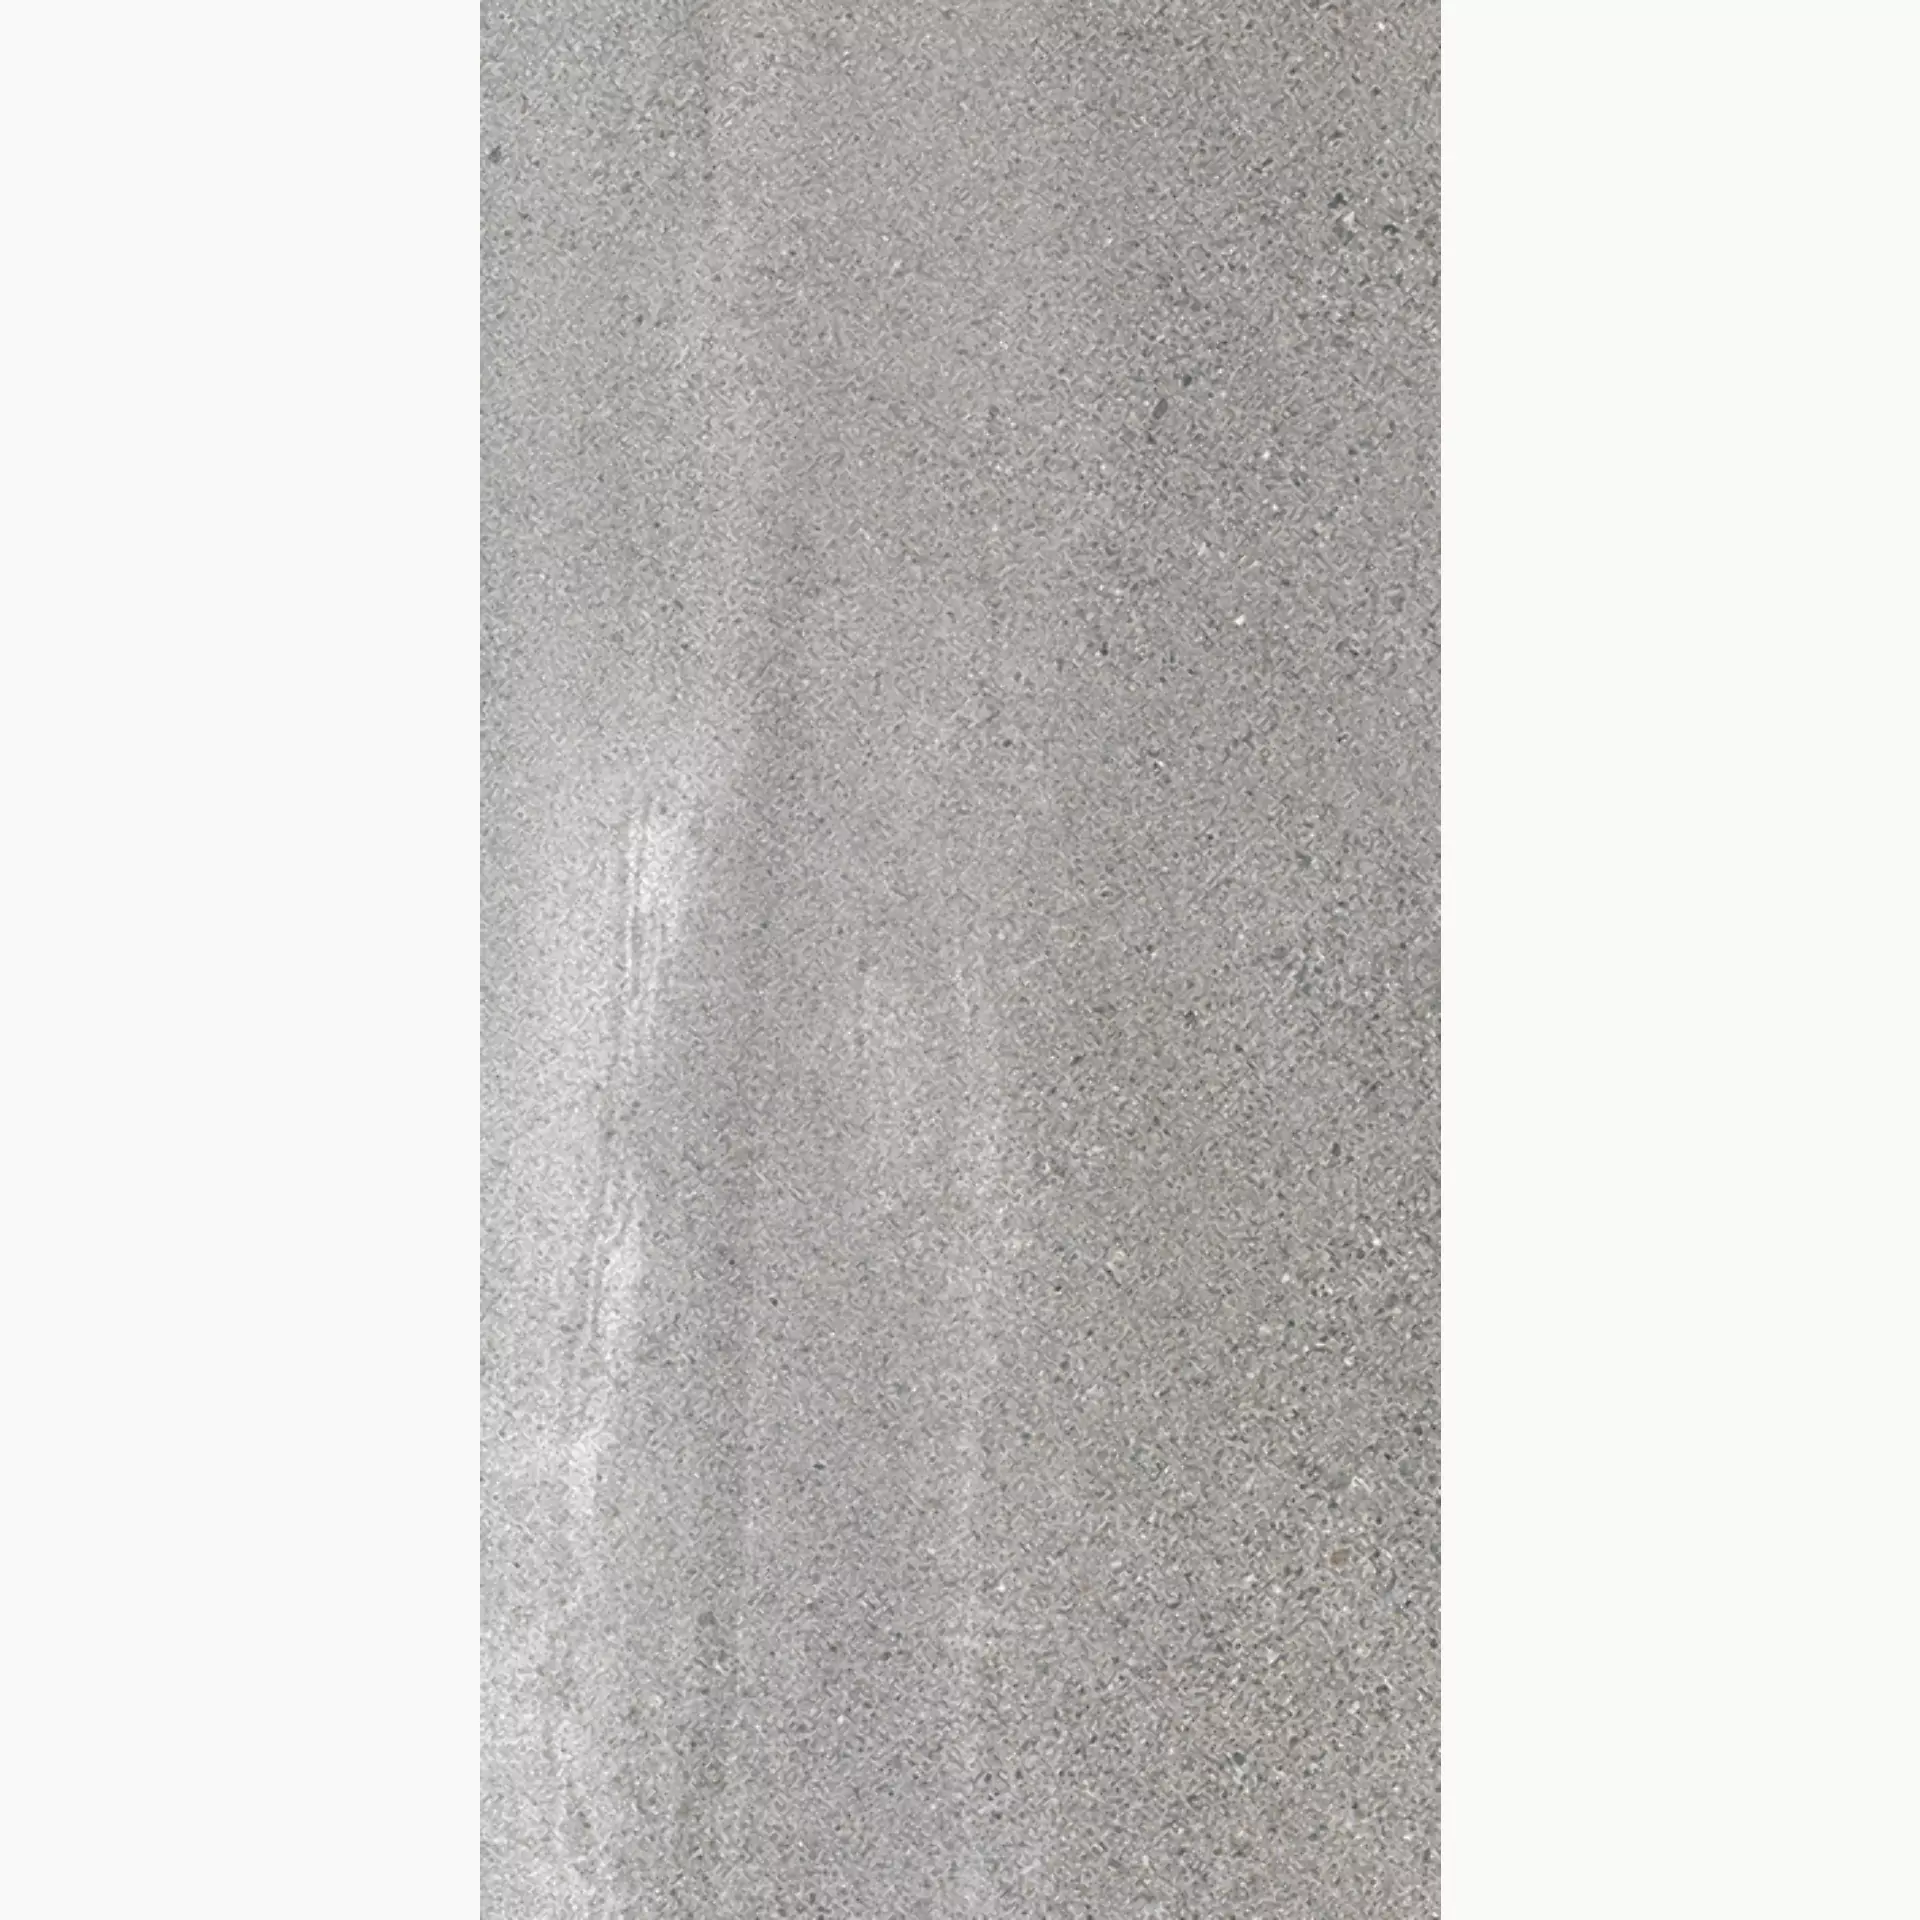 Villeroy & Boch Natural Blend Stone Grey Matt 2394-LY60 30x60cm rectified 9mm